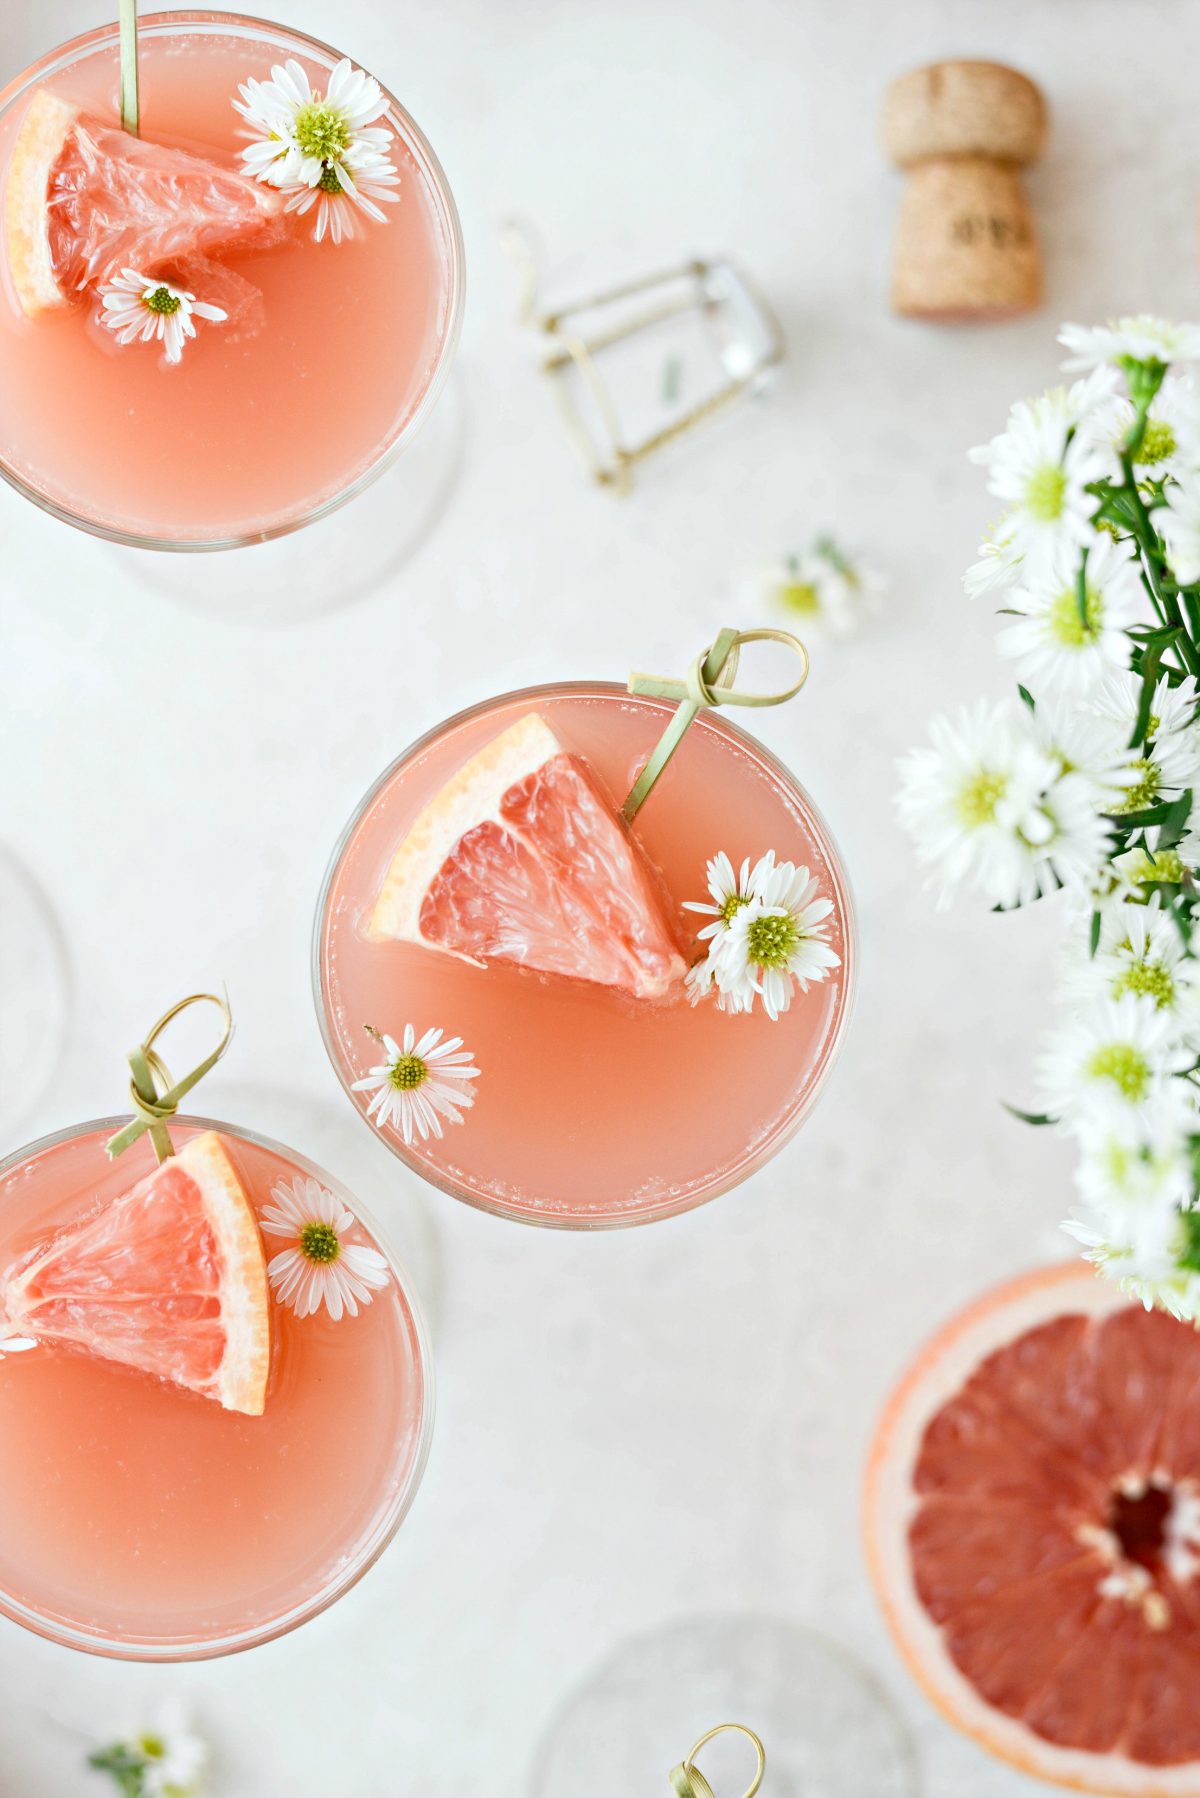 Greippirosé Mimosas l SimplyScratch.com #adult #beverage #greippi #rose #mimosa #easter #brunch #mothersday